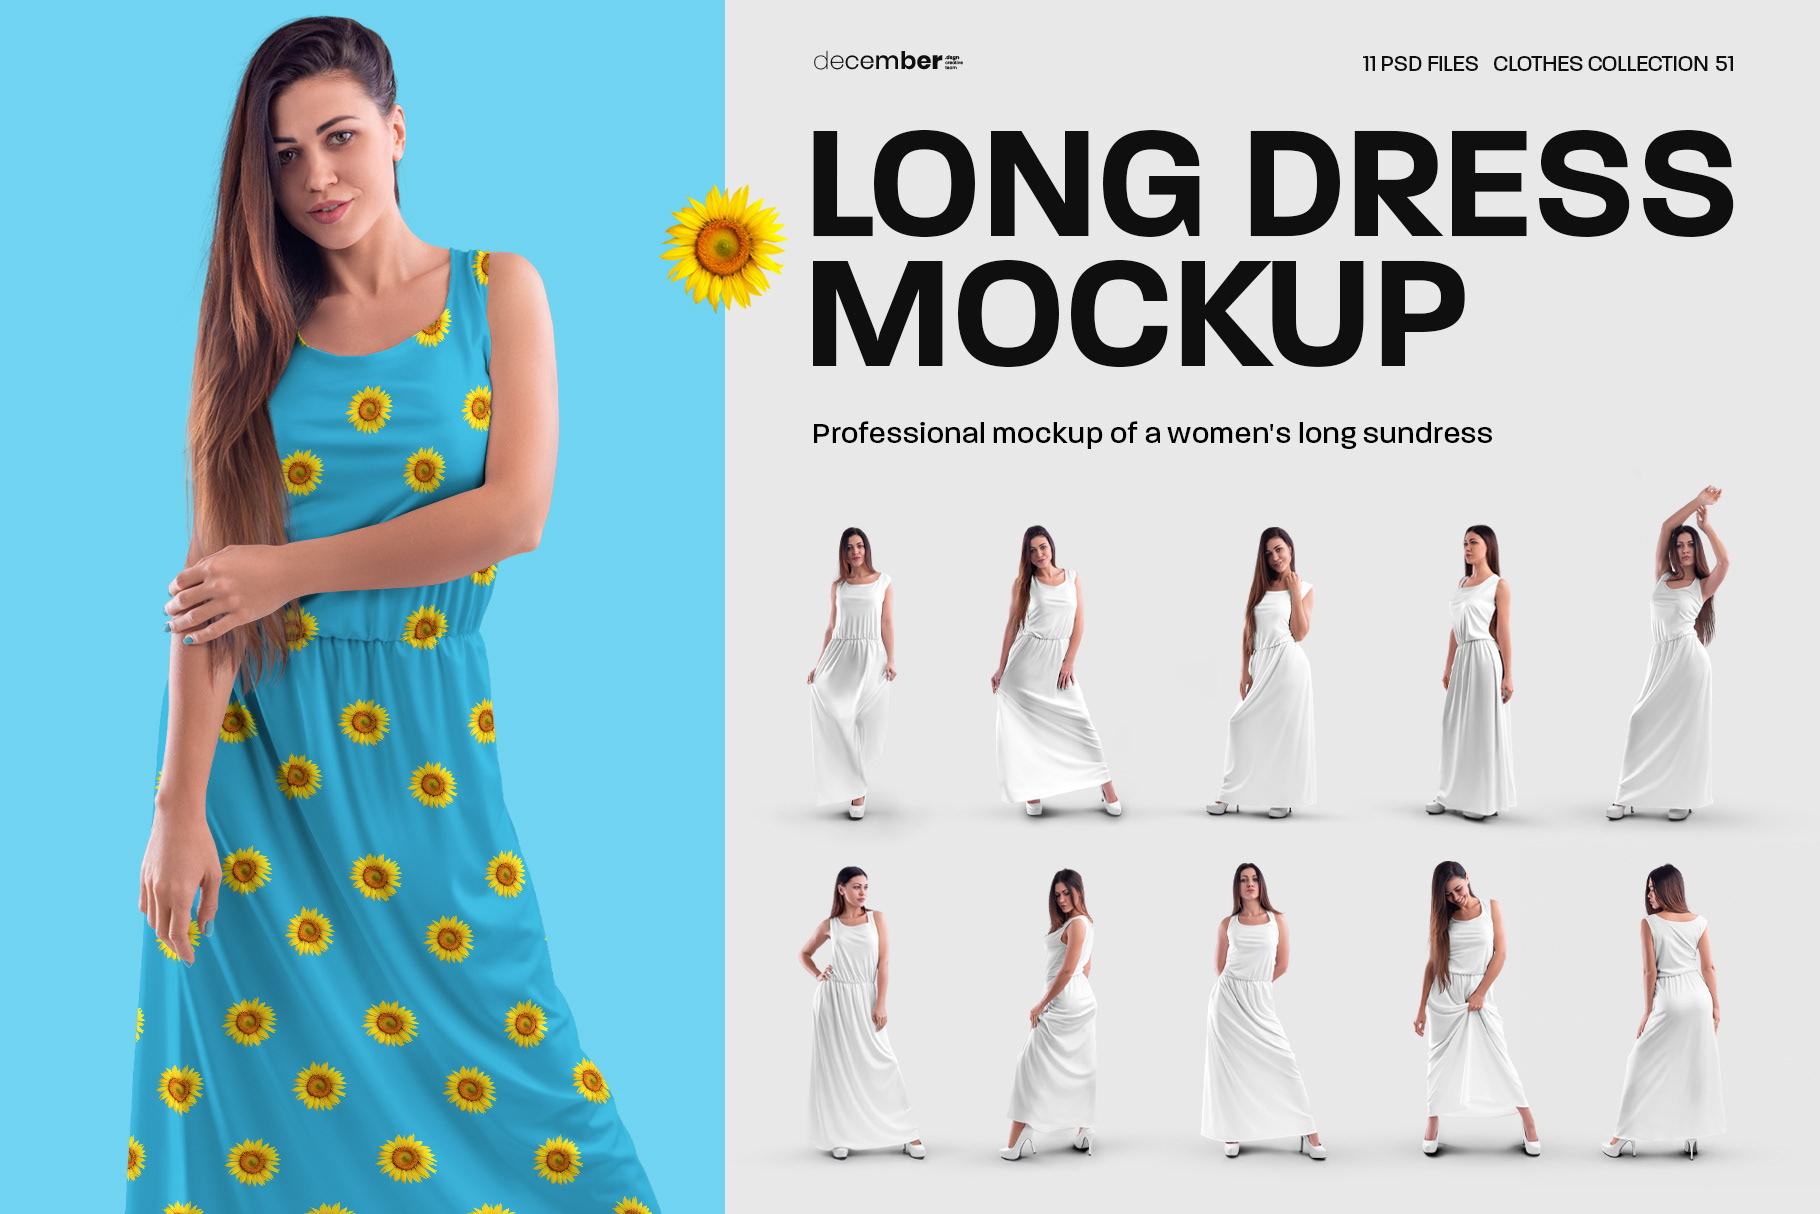 Creative Team December. dsgn - 11 Women’s Long Dress Mockups (1 Free)